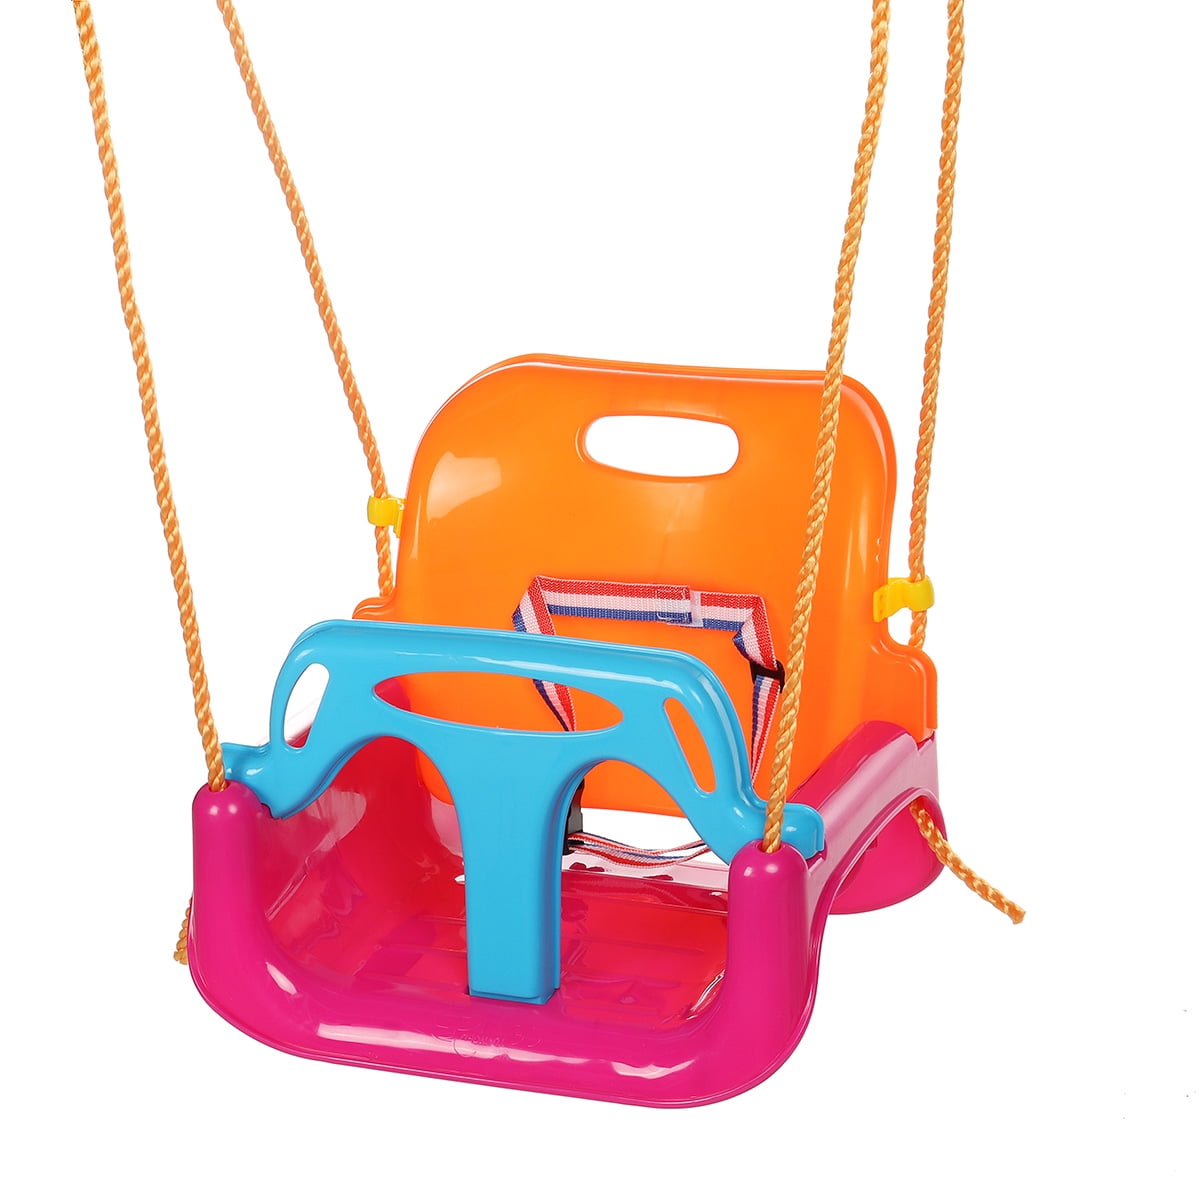 Hanging Toddler Swing Seat For Kids Infants High Back Full Bucket Heavy Duty Red 